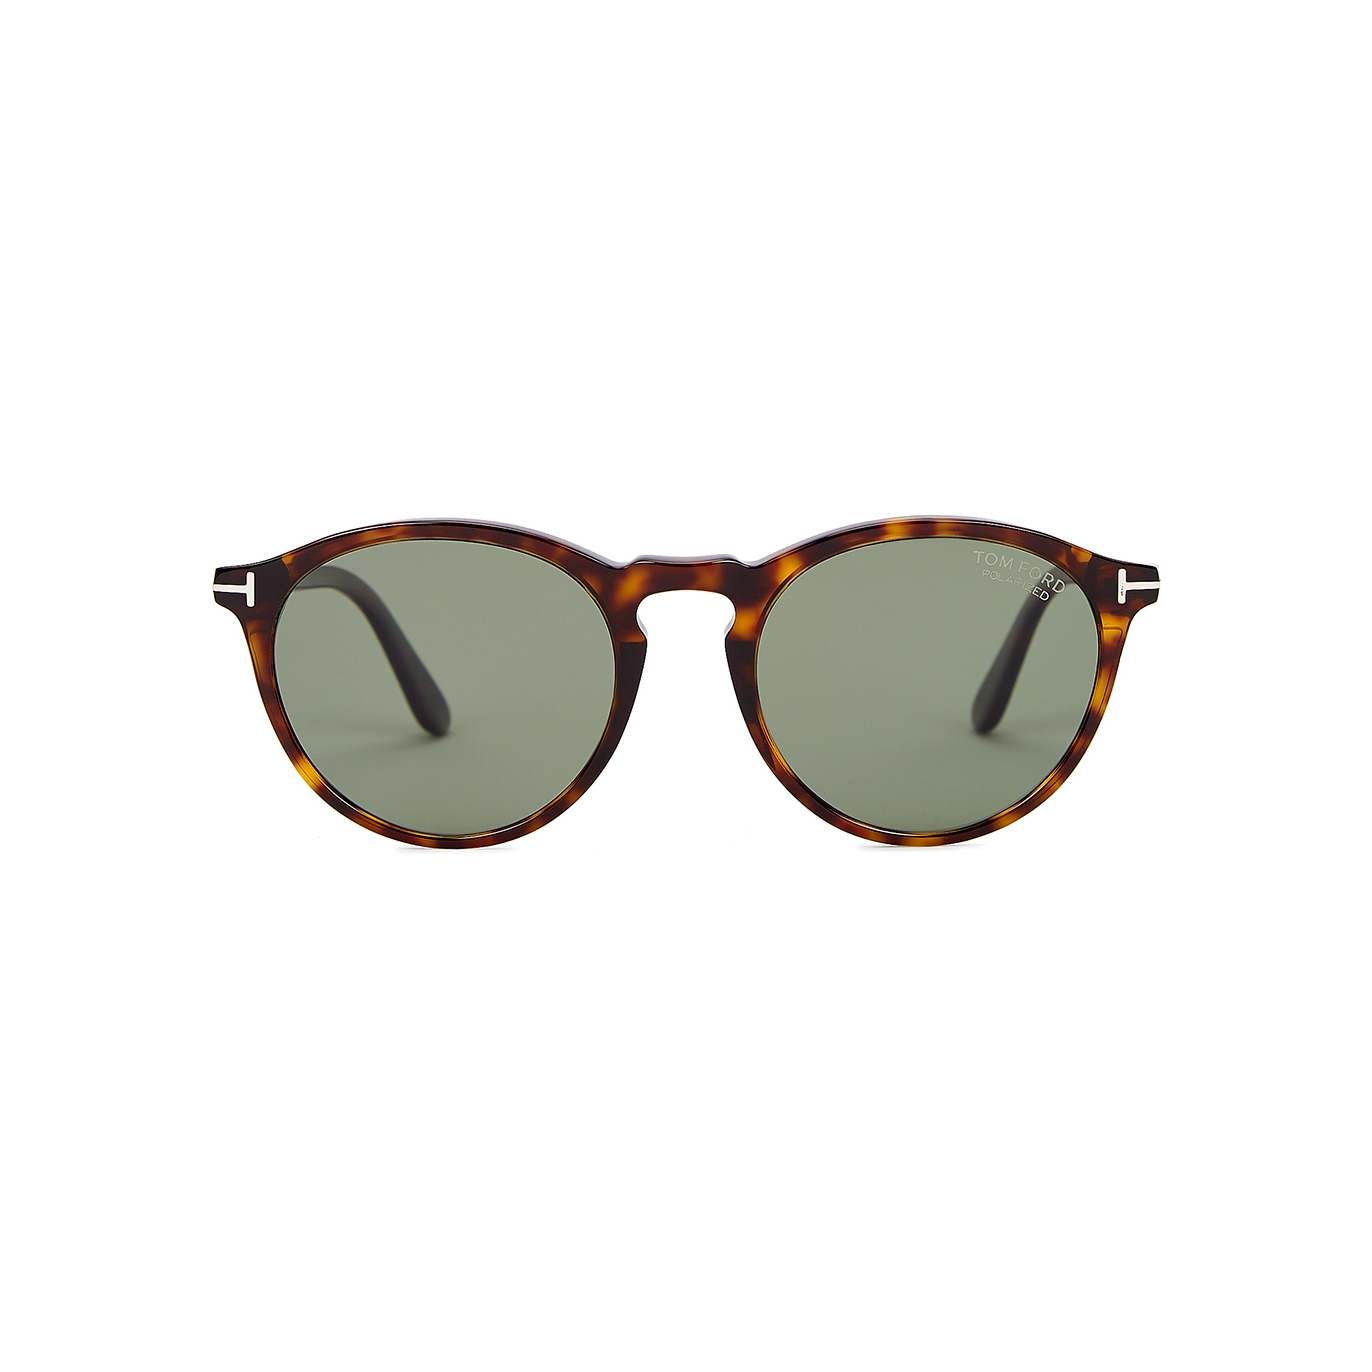 Tom Ford Aurele Tortoiseshell Round-frame Sunglasses - Brown - One Size